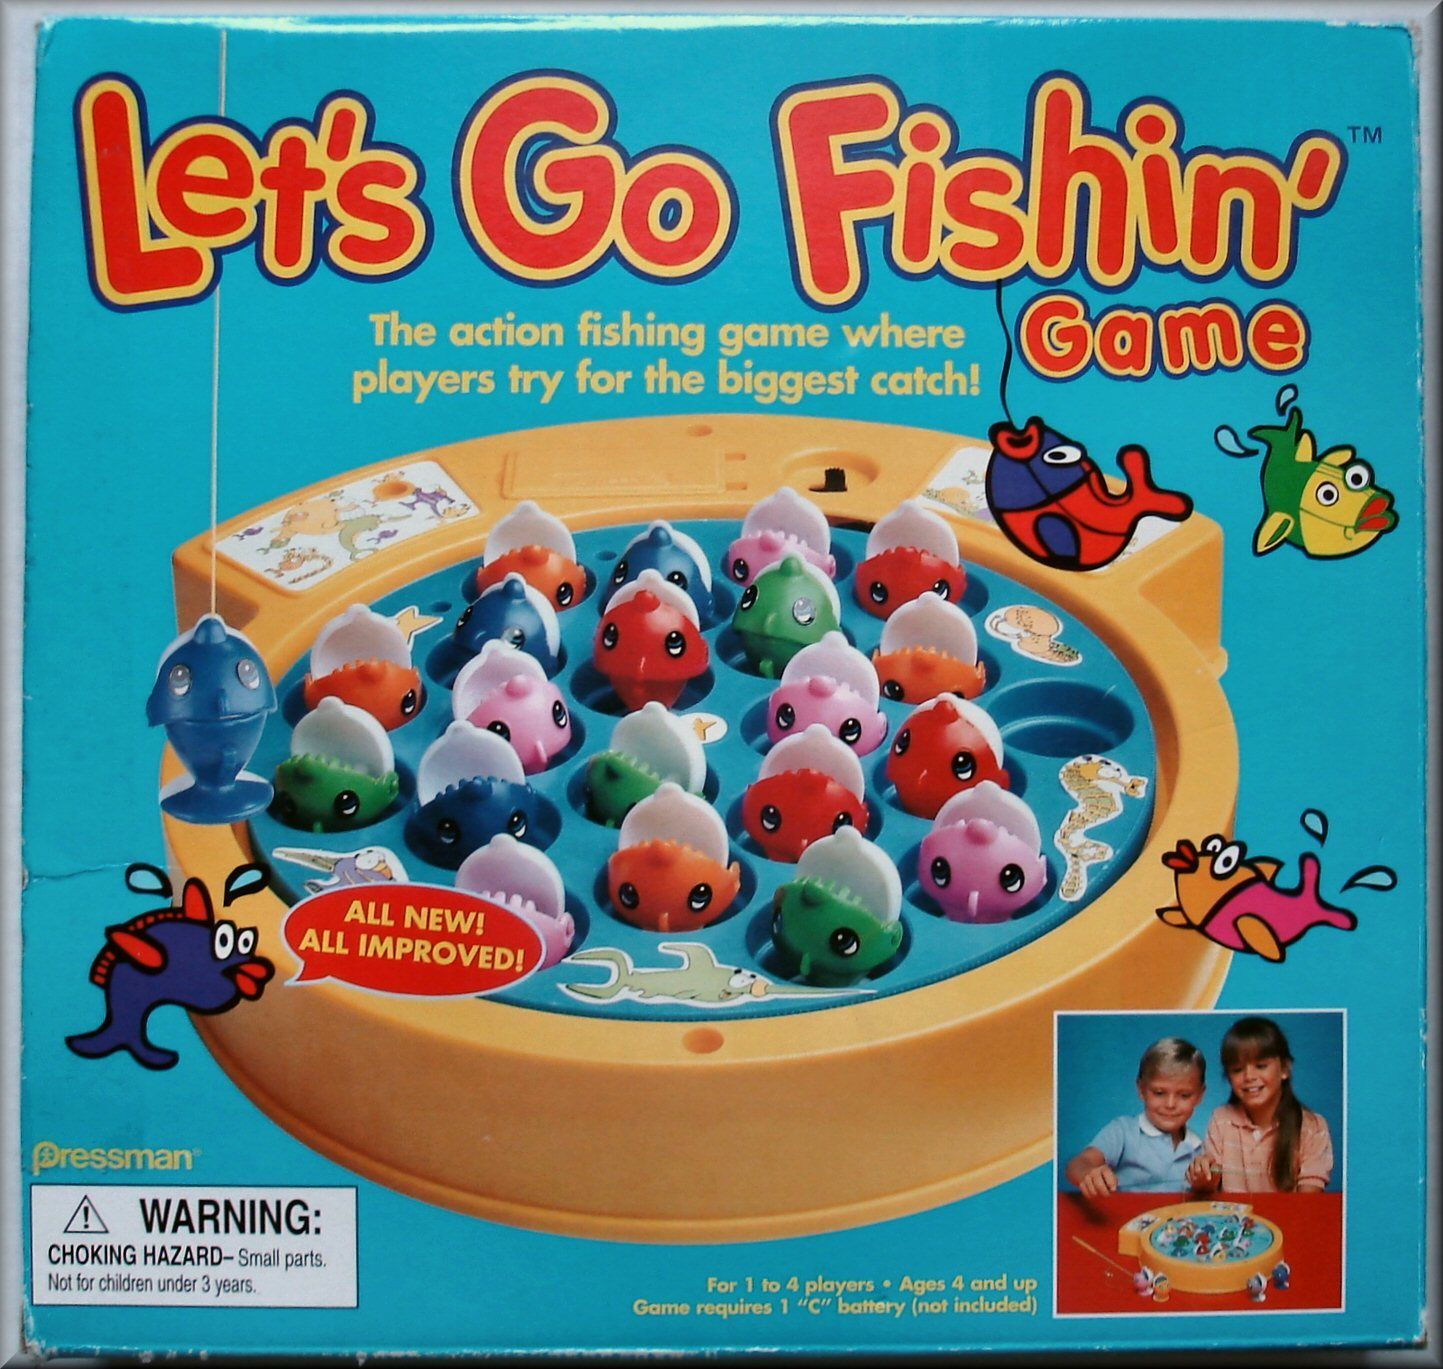 Let's Go Fishin'